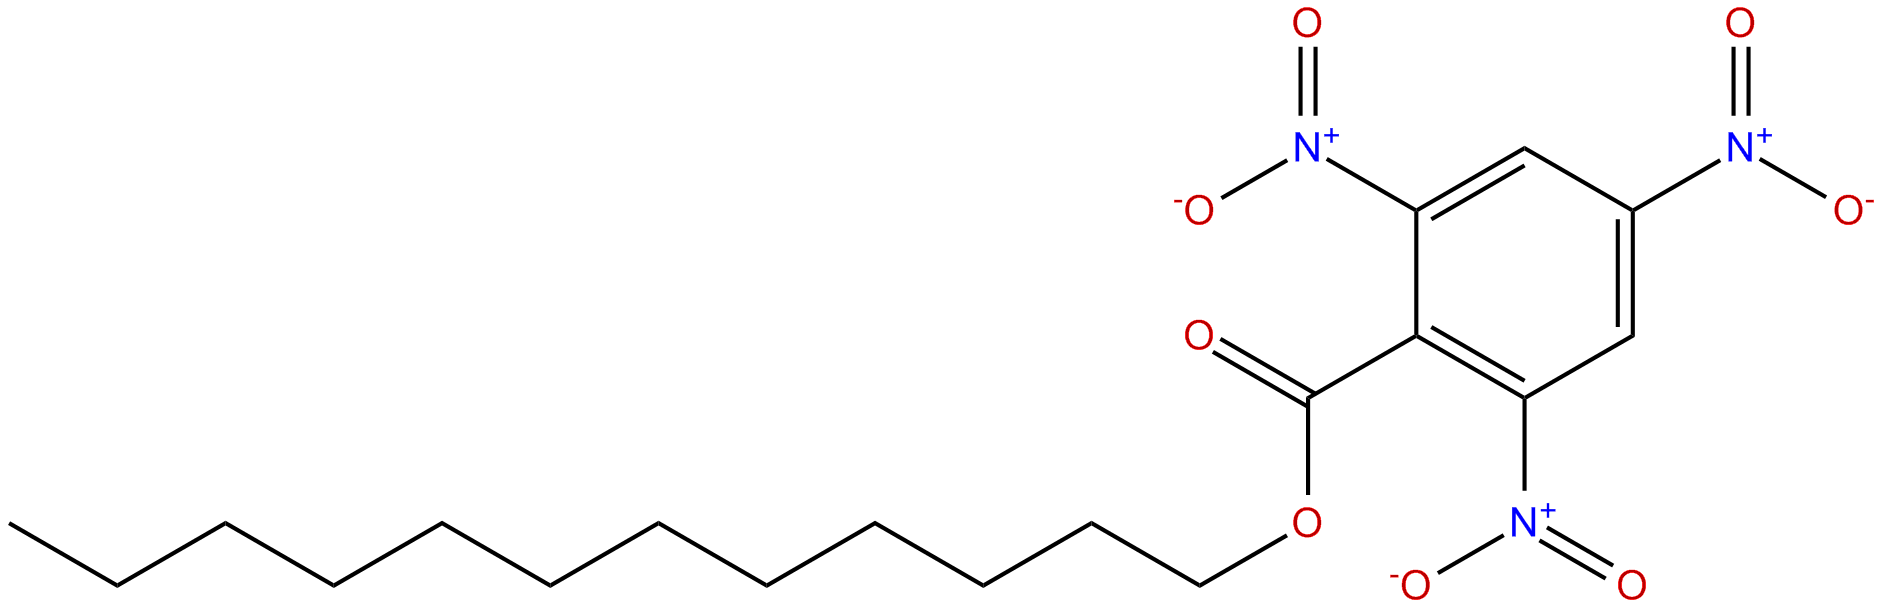 Image of dodecyl 2,4,6-trinitrobenzoate